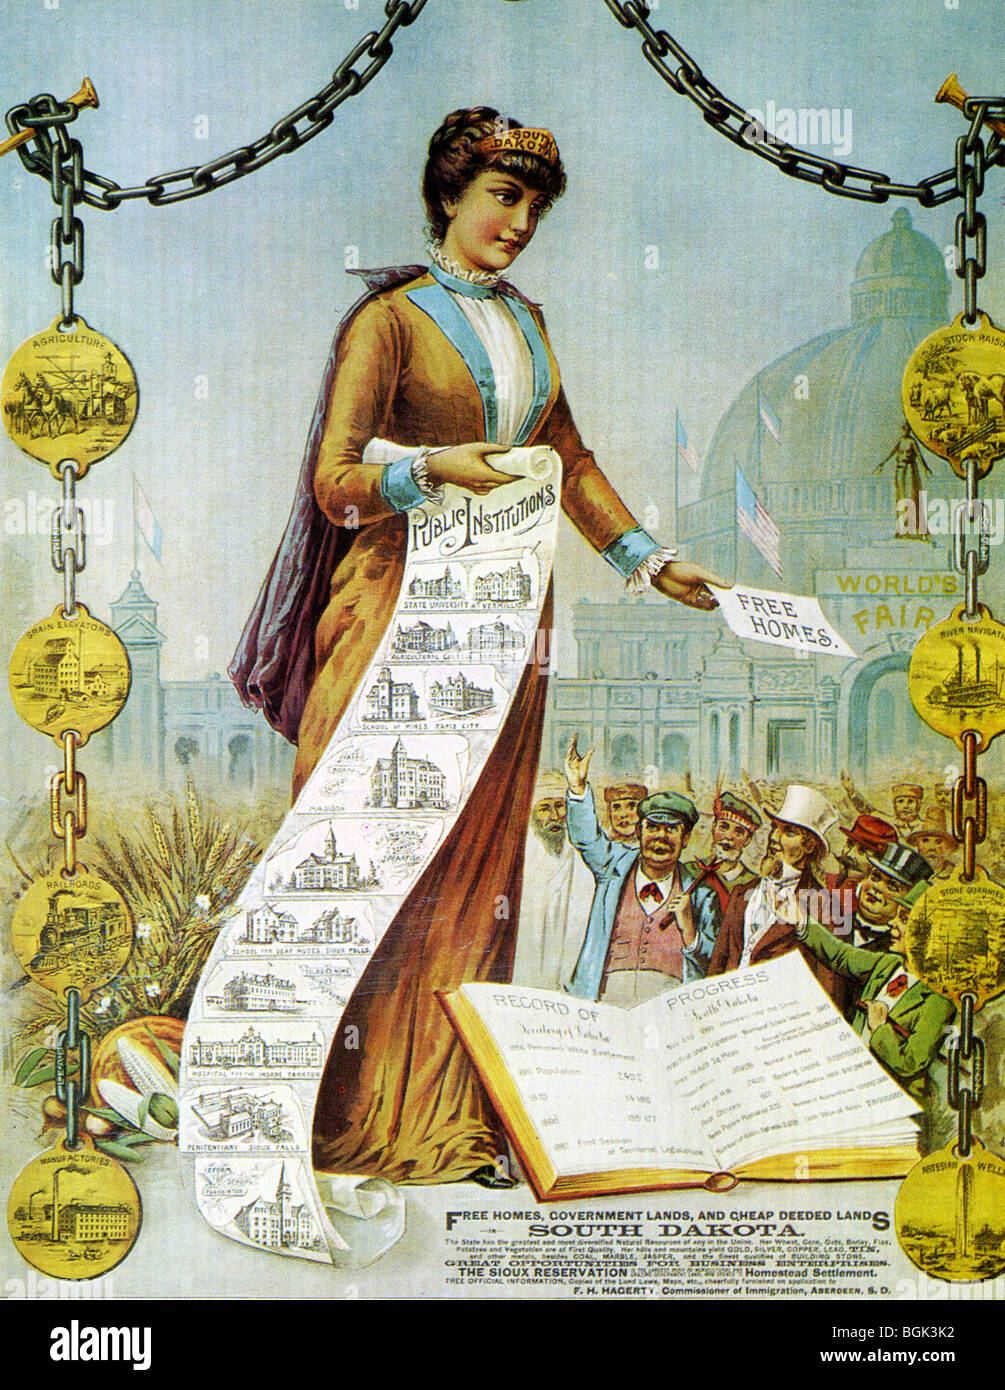 SOUTH DAKOTA LAND GRANTS poster 1890 - see Description below for details Stock Photo